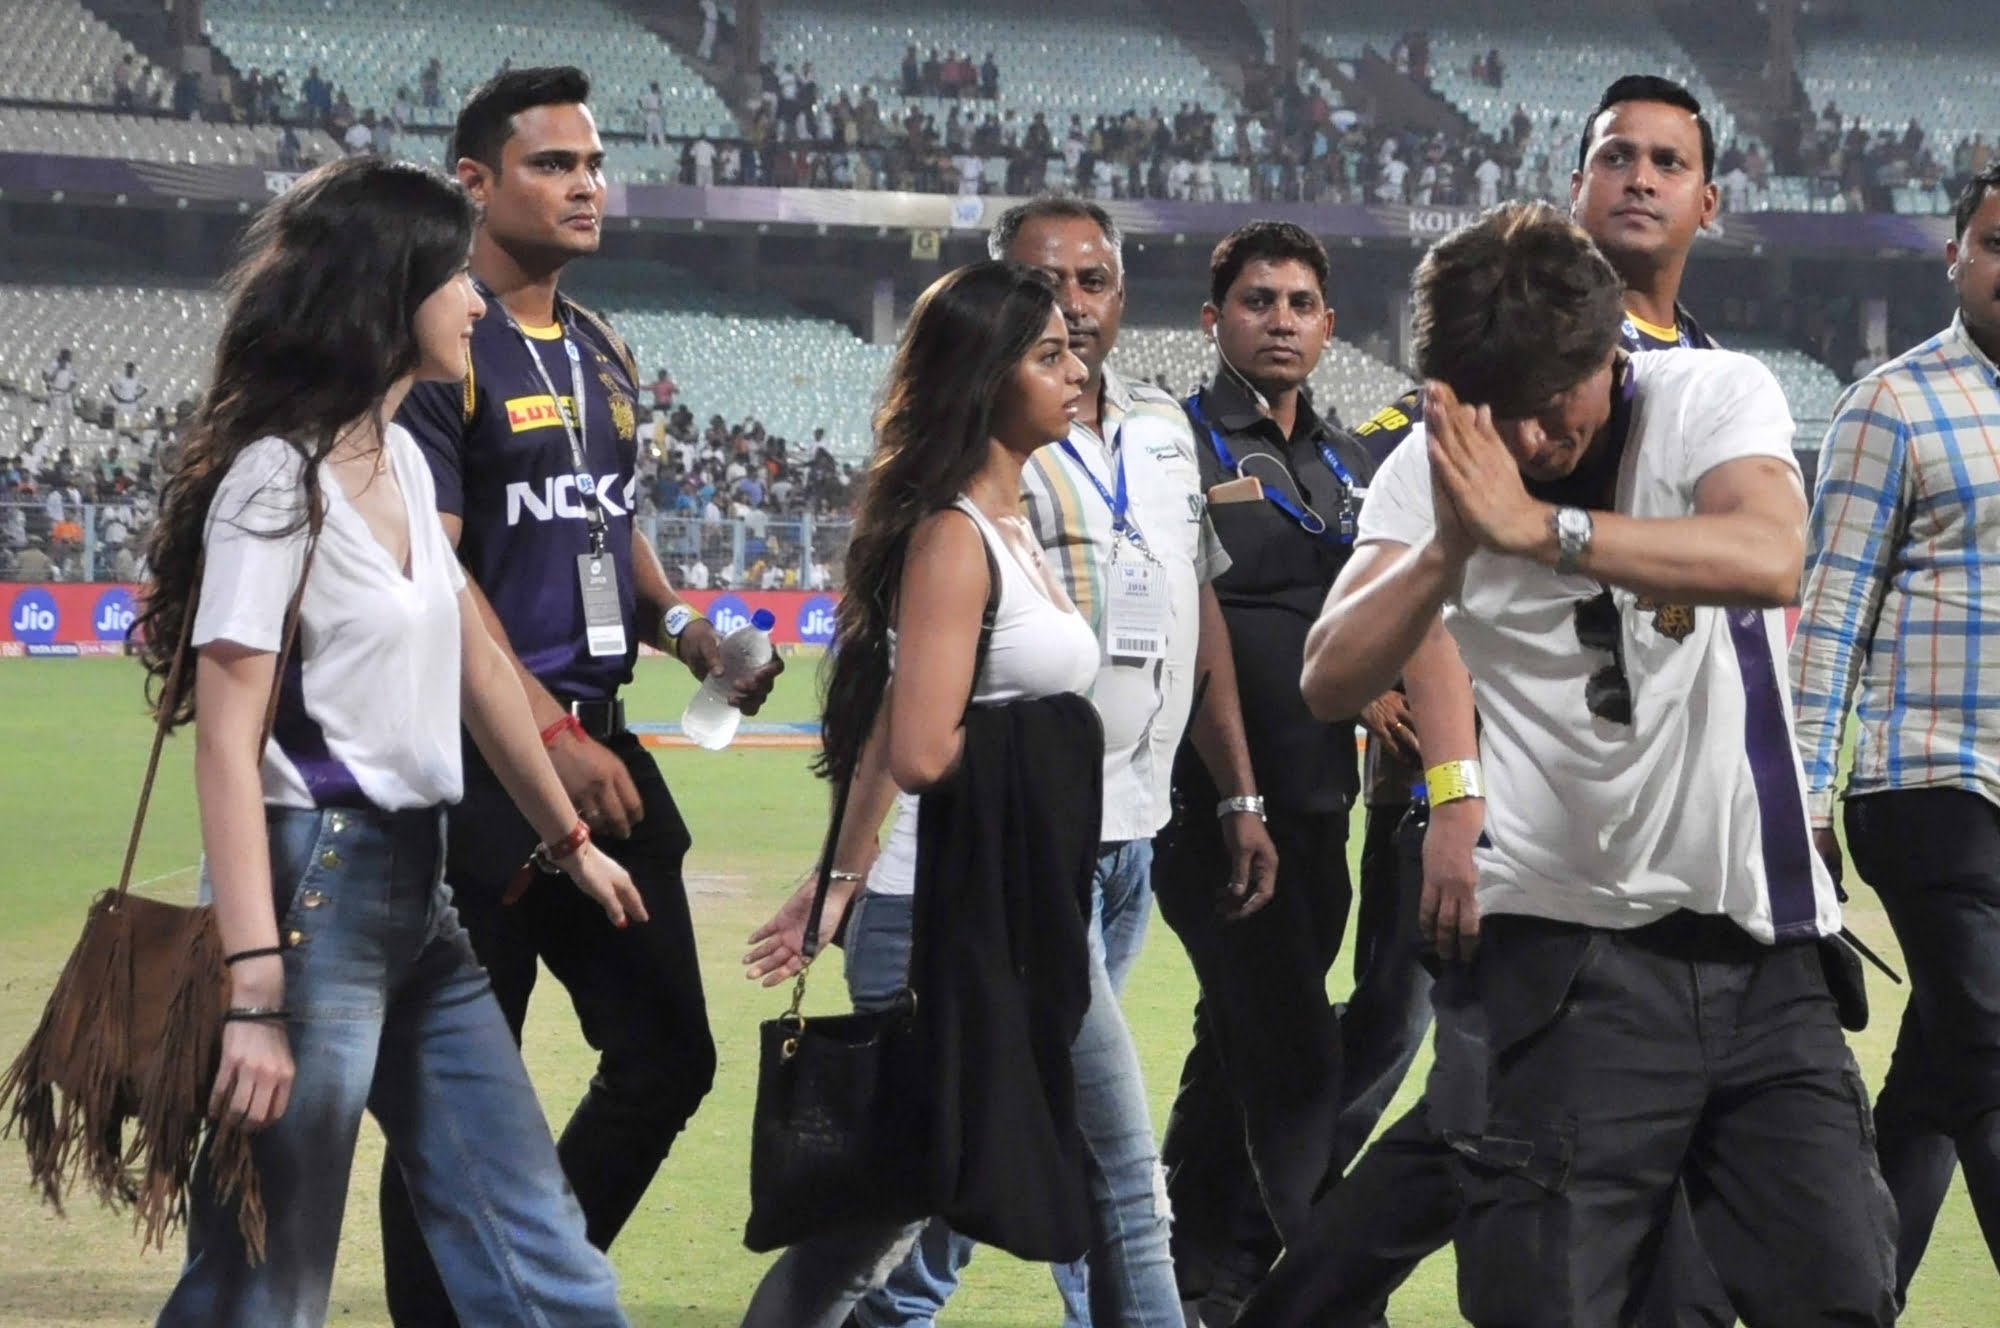 Kolkata: Kolkata Knight Riders co-owner Shah Rukh Khan greets fans after Kolkata Knight Riders won an IPL 2018 match against Royal Challengers Bangalore at the Eden Gardens in Kolkata